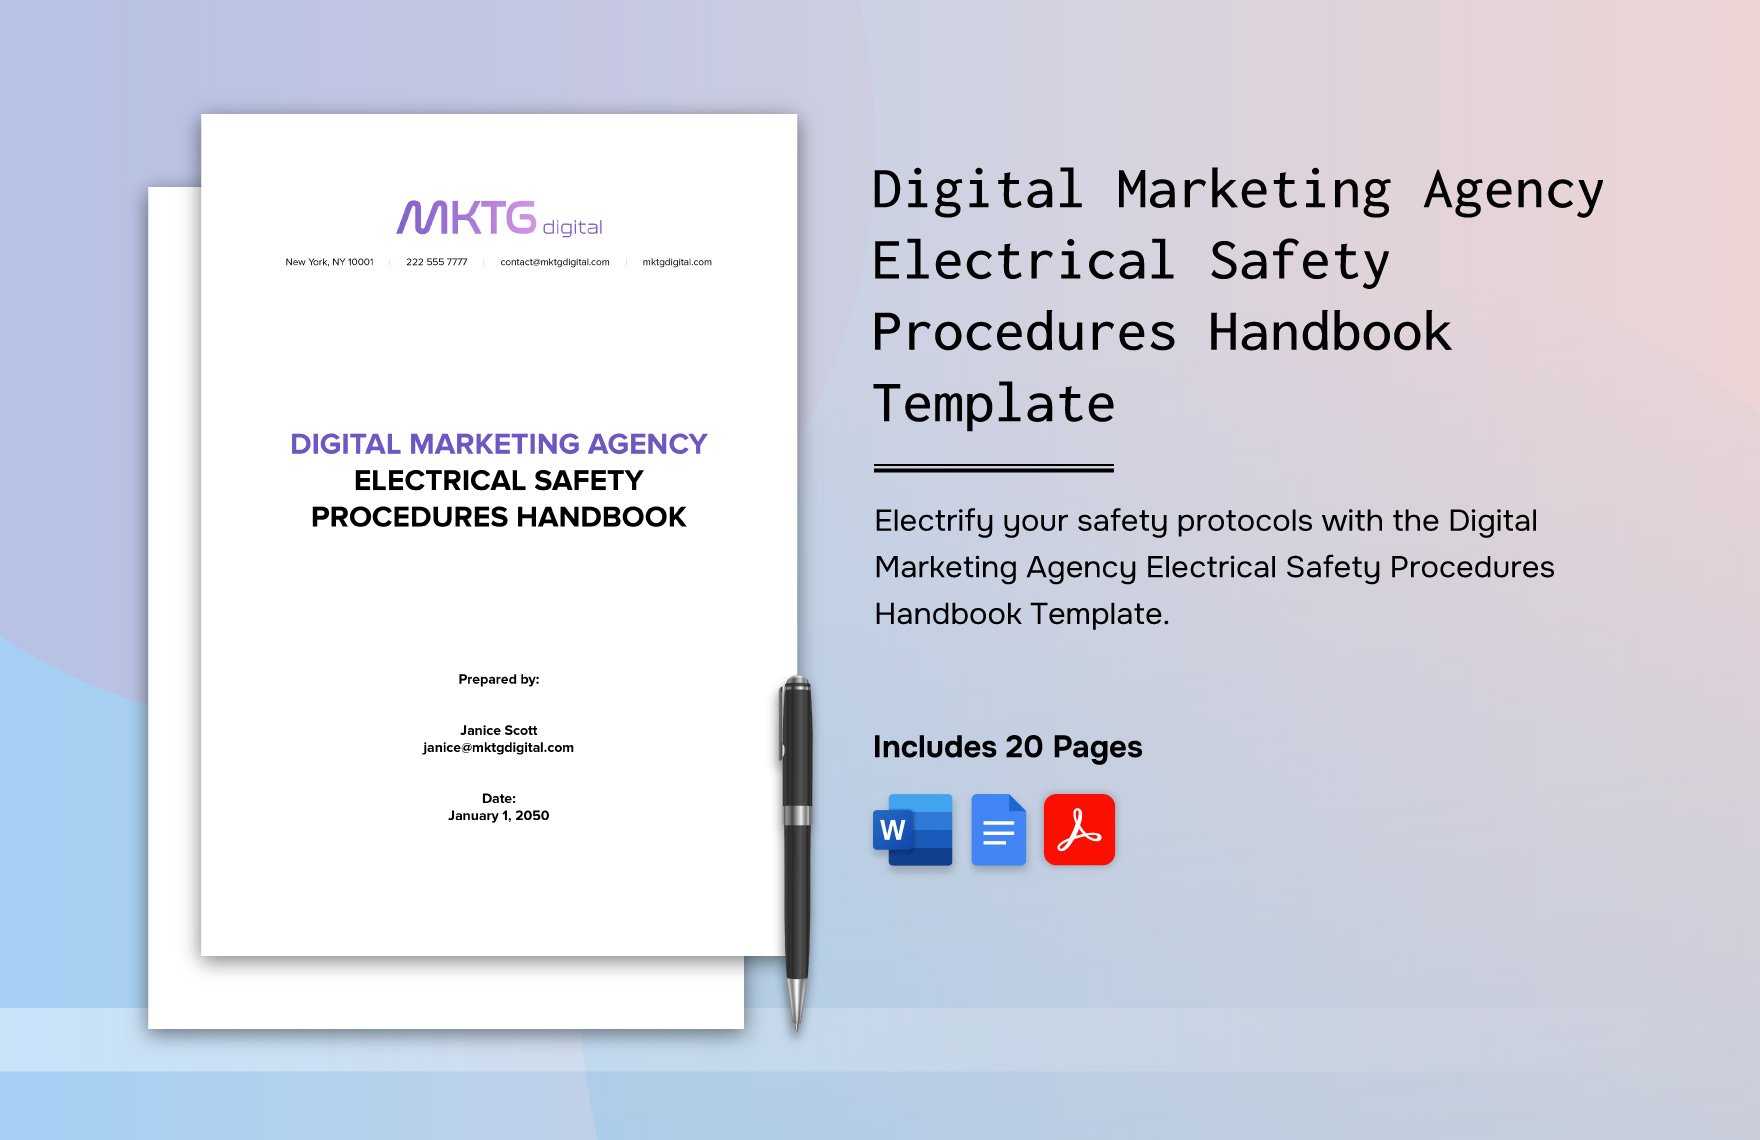 Digital Marketing Agency Electrical Safety Procedures Handbook Template